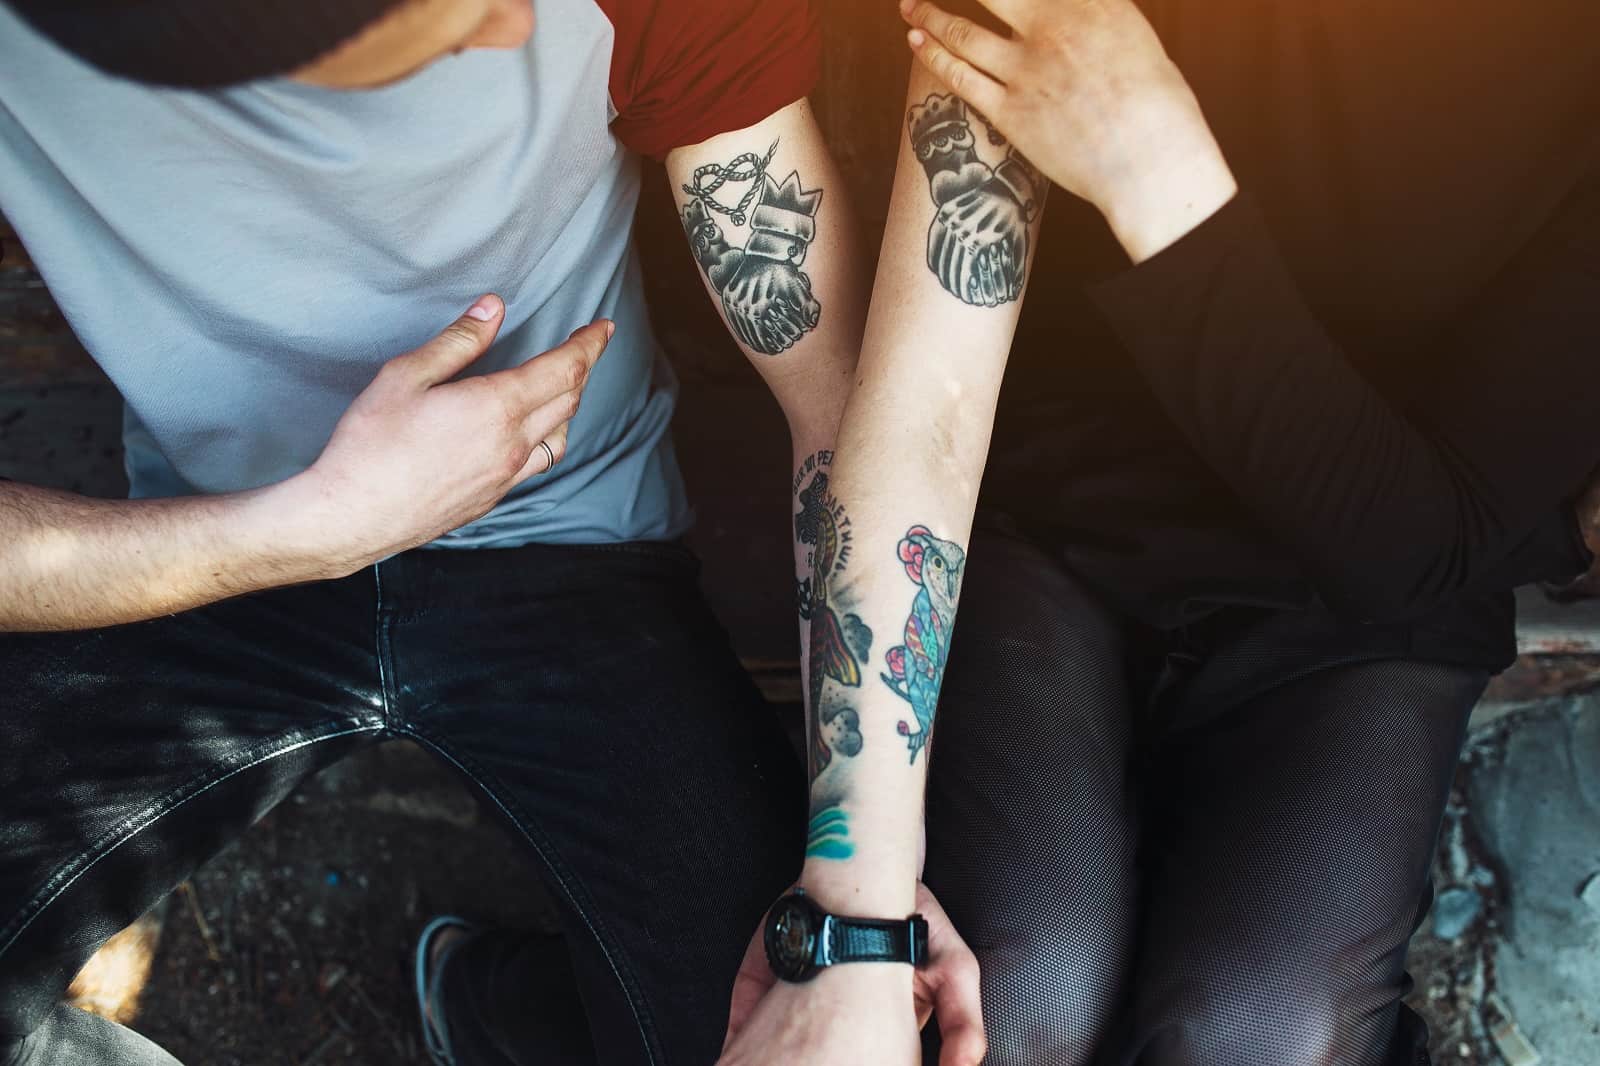 Tattoo Blowout or Still Healing: How to Fix? - Saved Tattoo